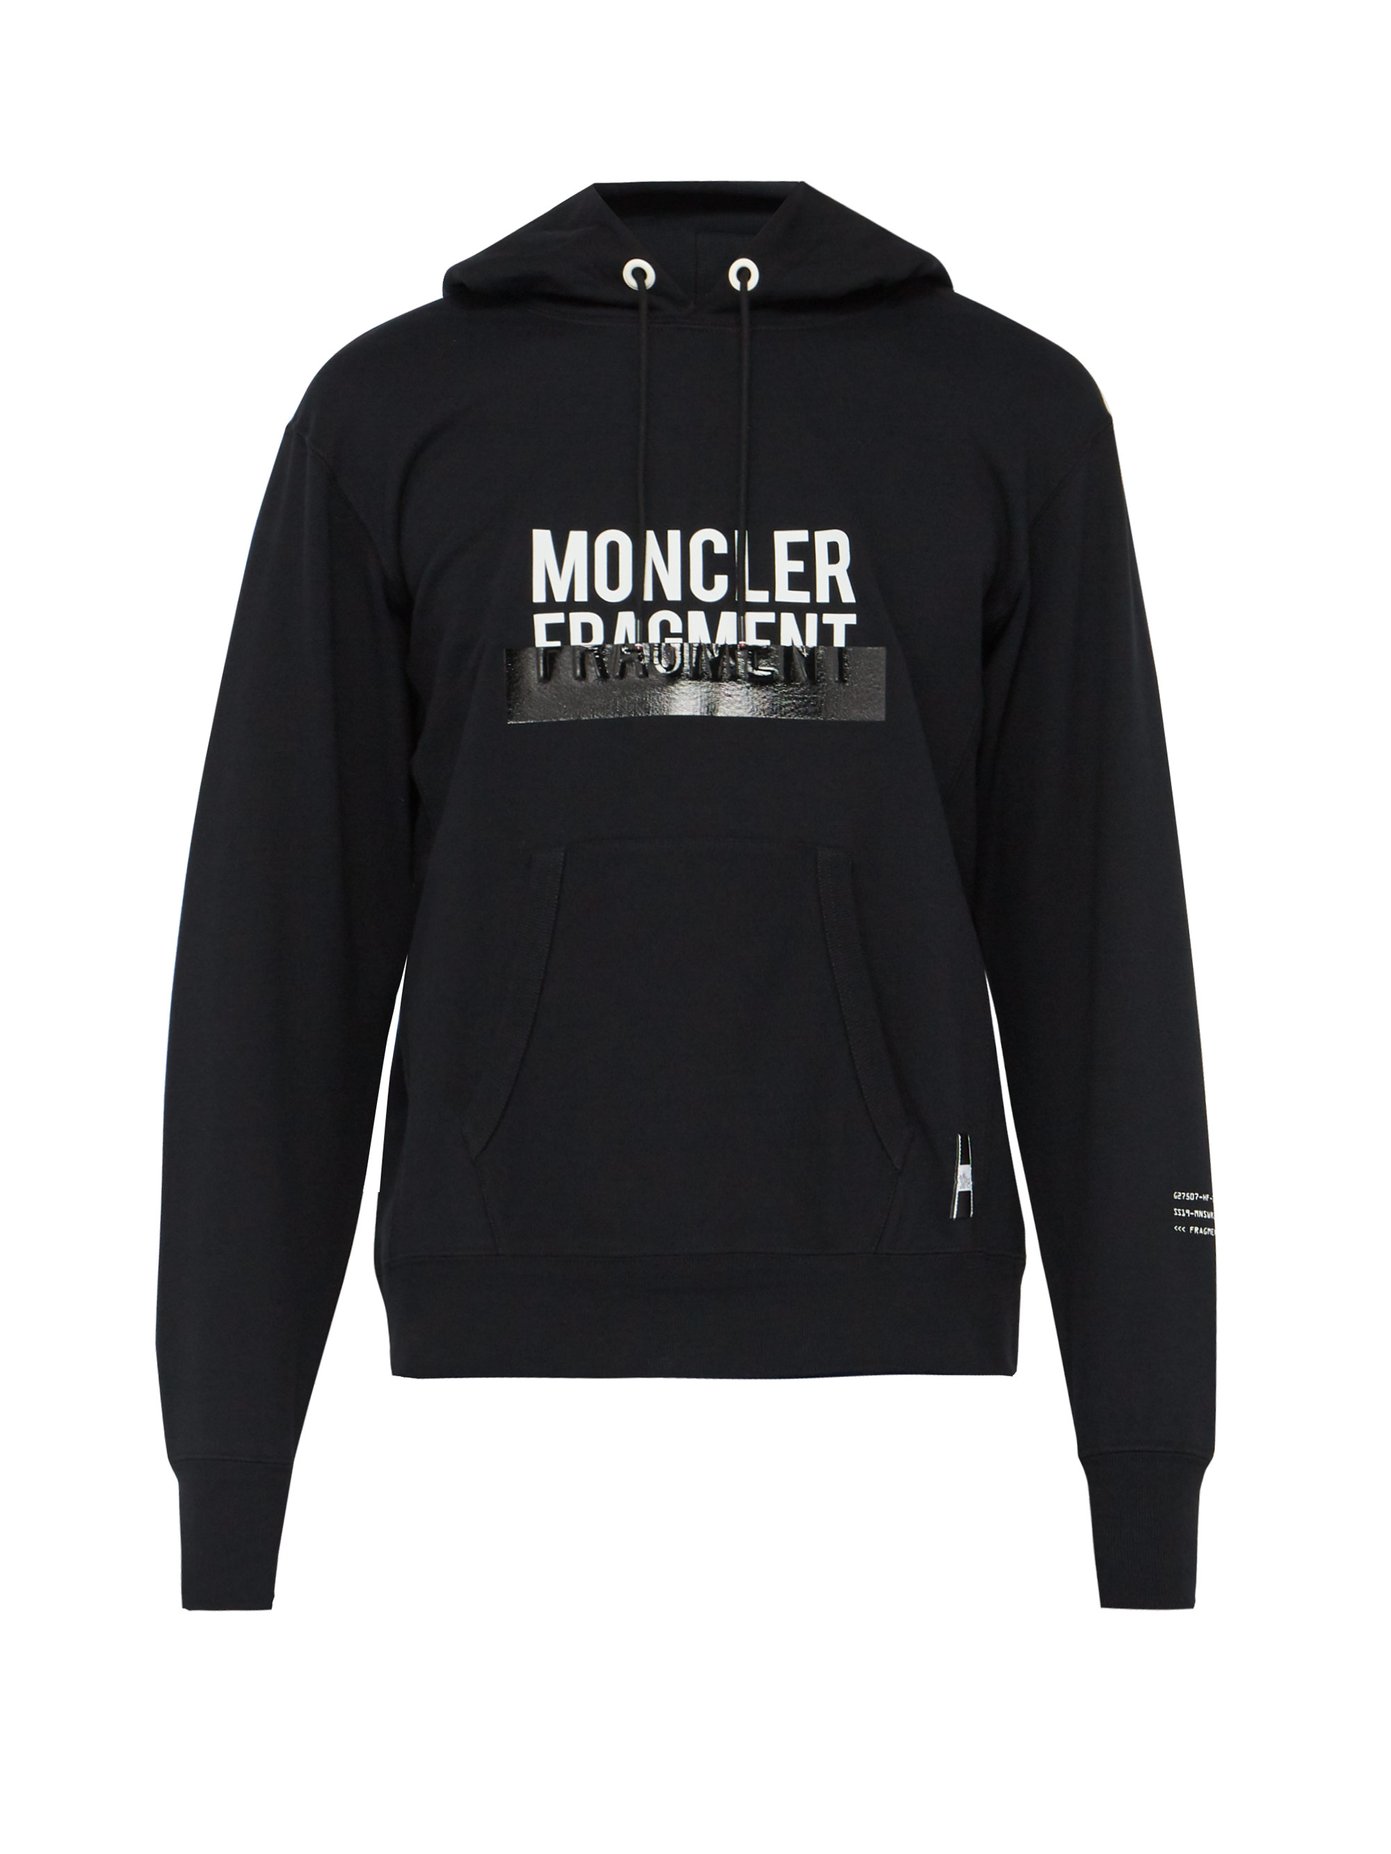 moncler fragment hoodie